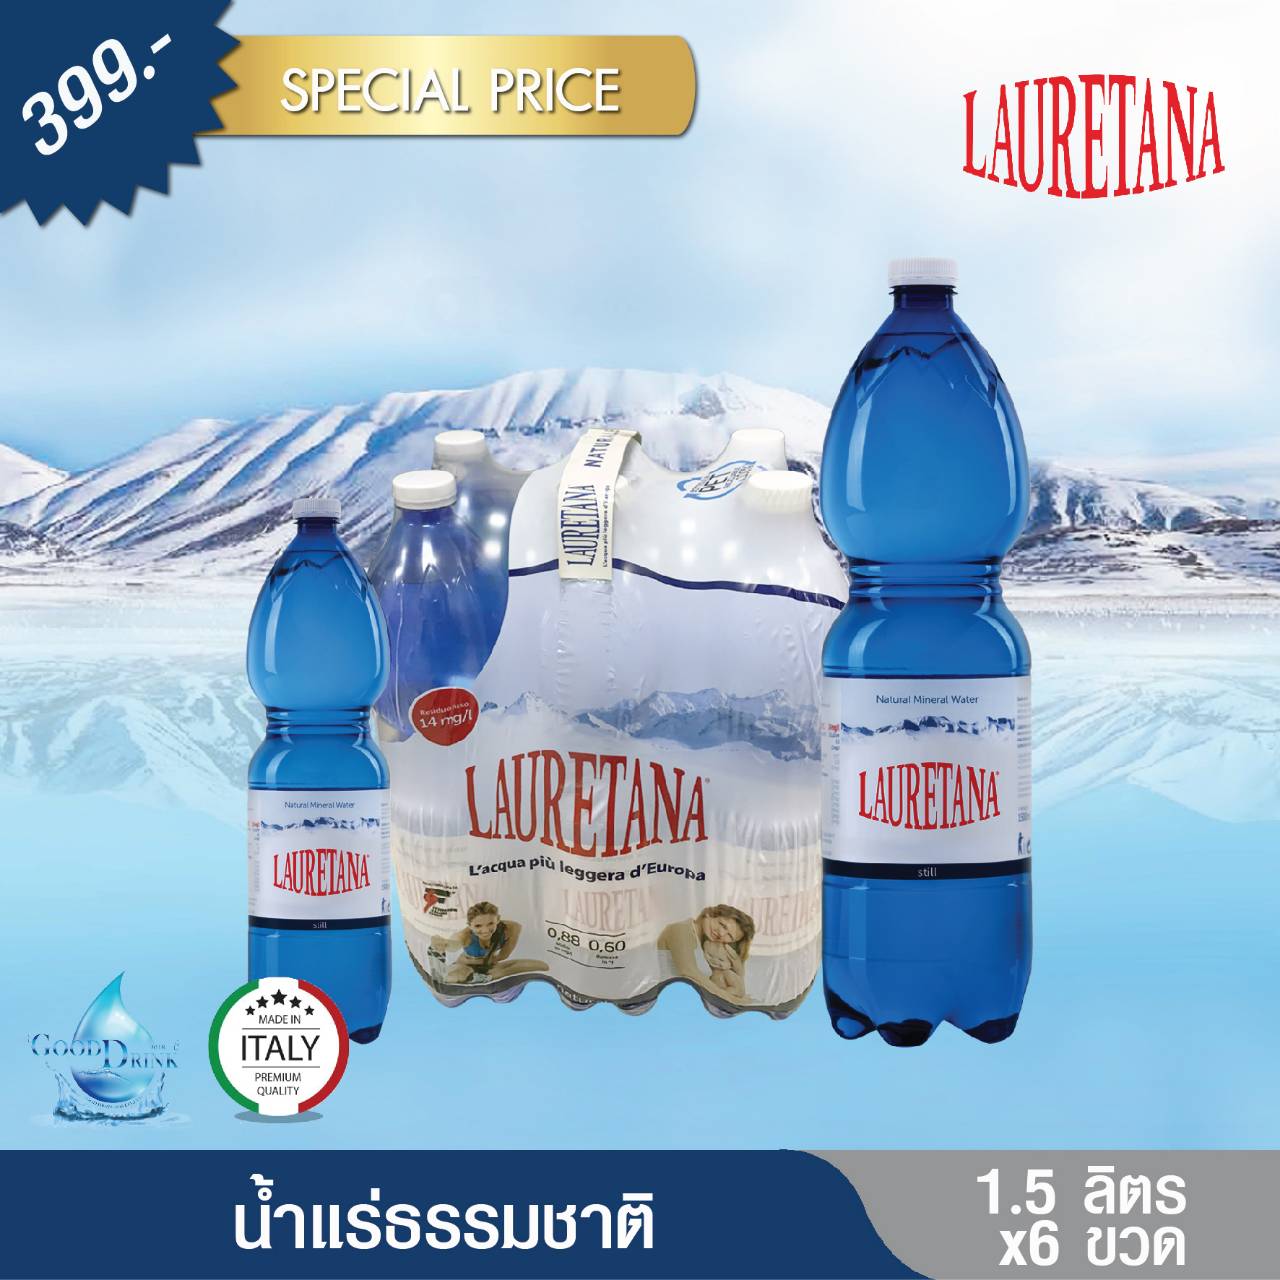 Lauretana Natural Mineral Water PET 100% recyclable bottles 1500 ML. Pack 6 bottles, เลาว์เรตาน่า น้ำแร่ธรรมชาติ ขวดพลาสติก รีไซเคิล 1500 มล. แพค 6 ขวด